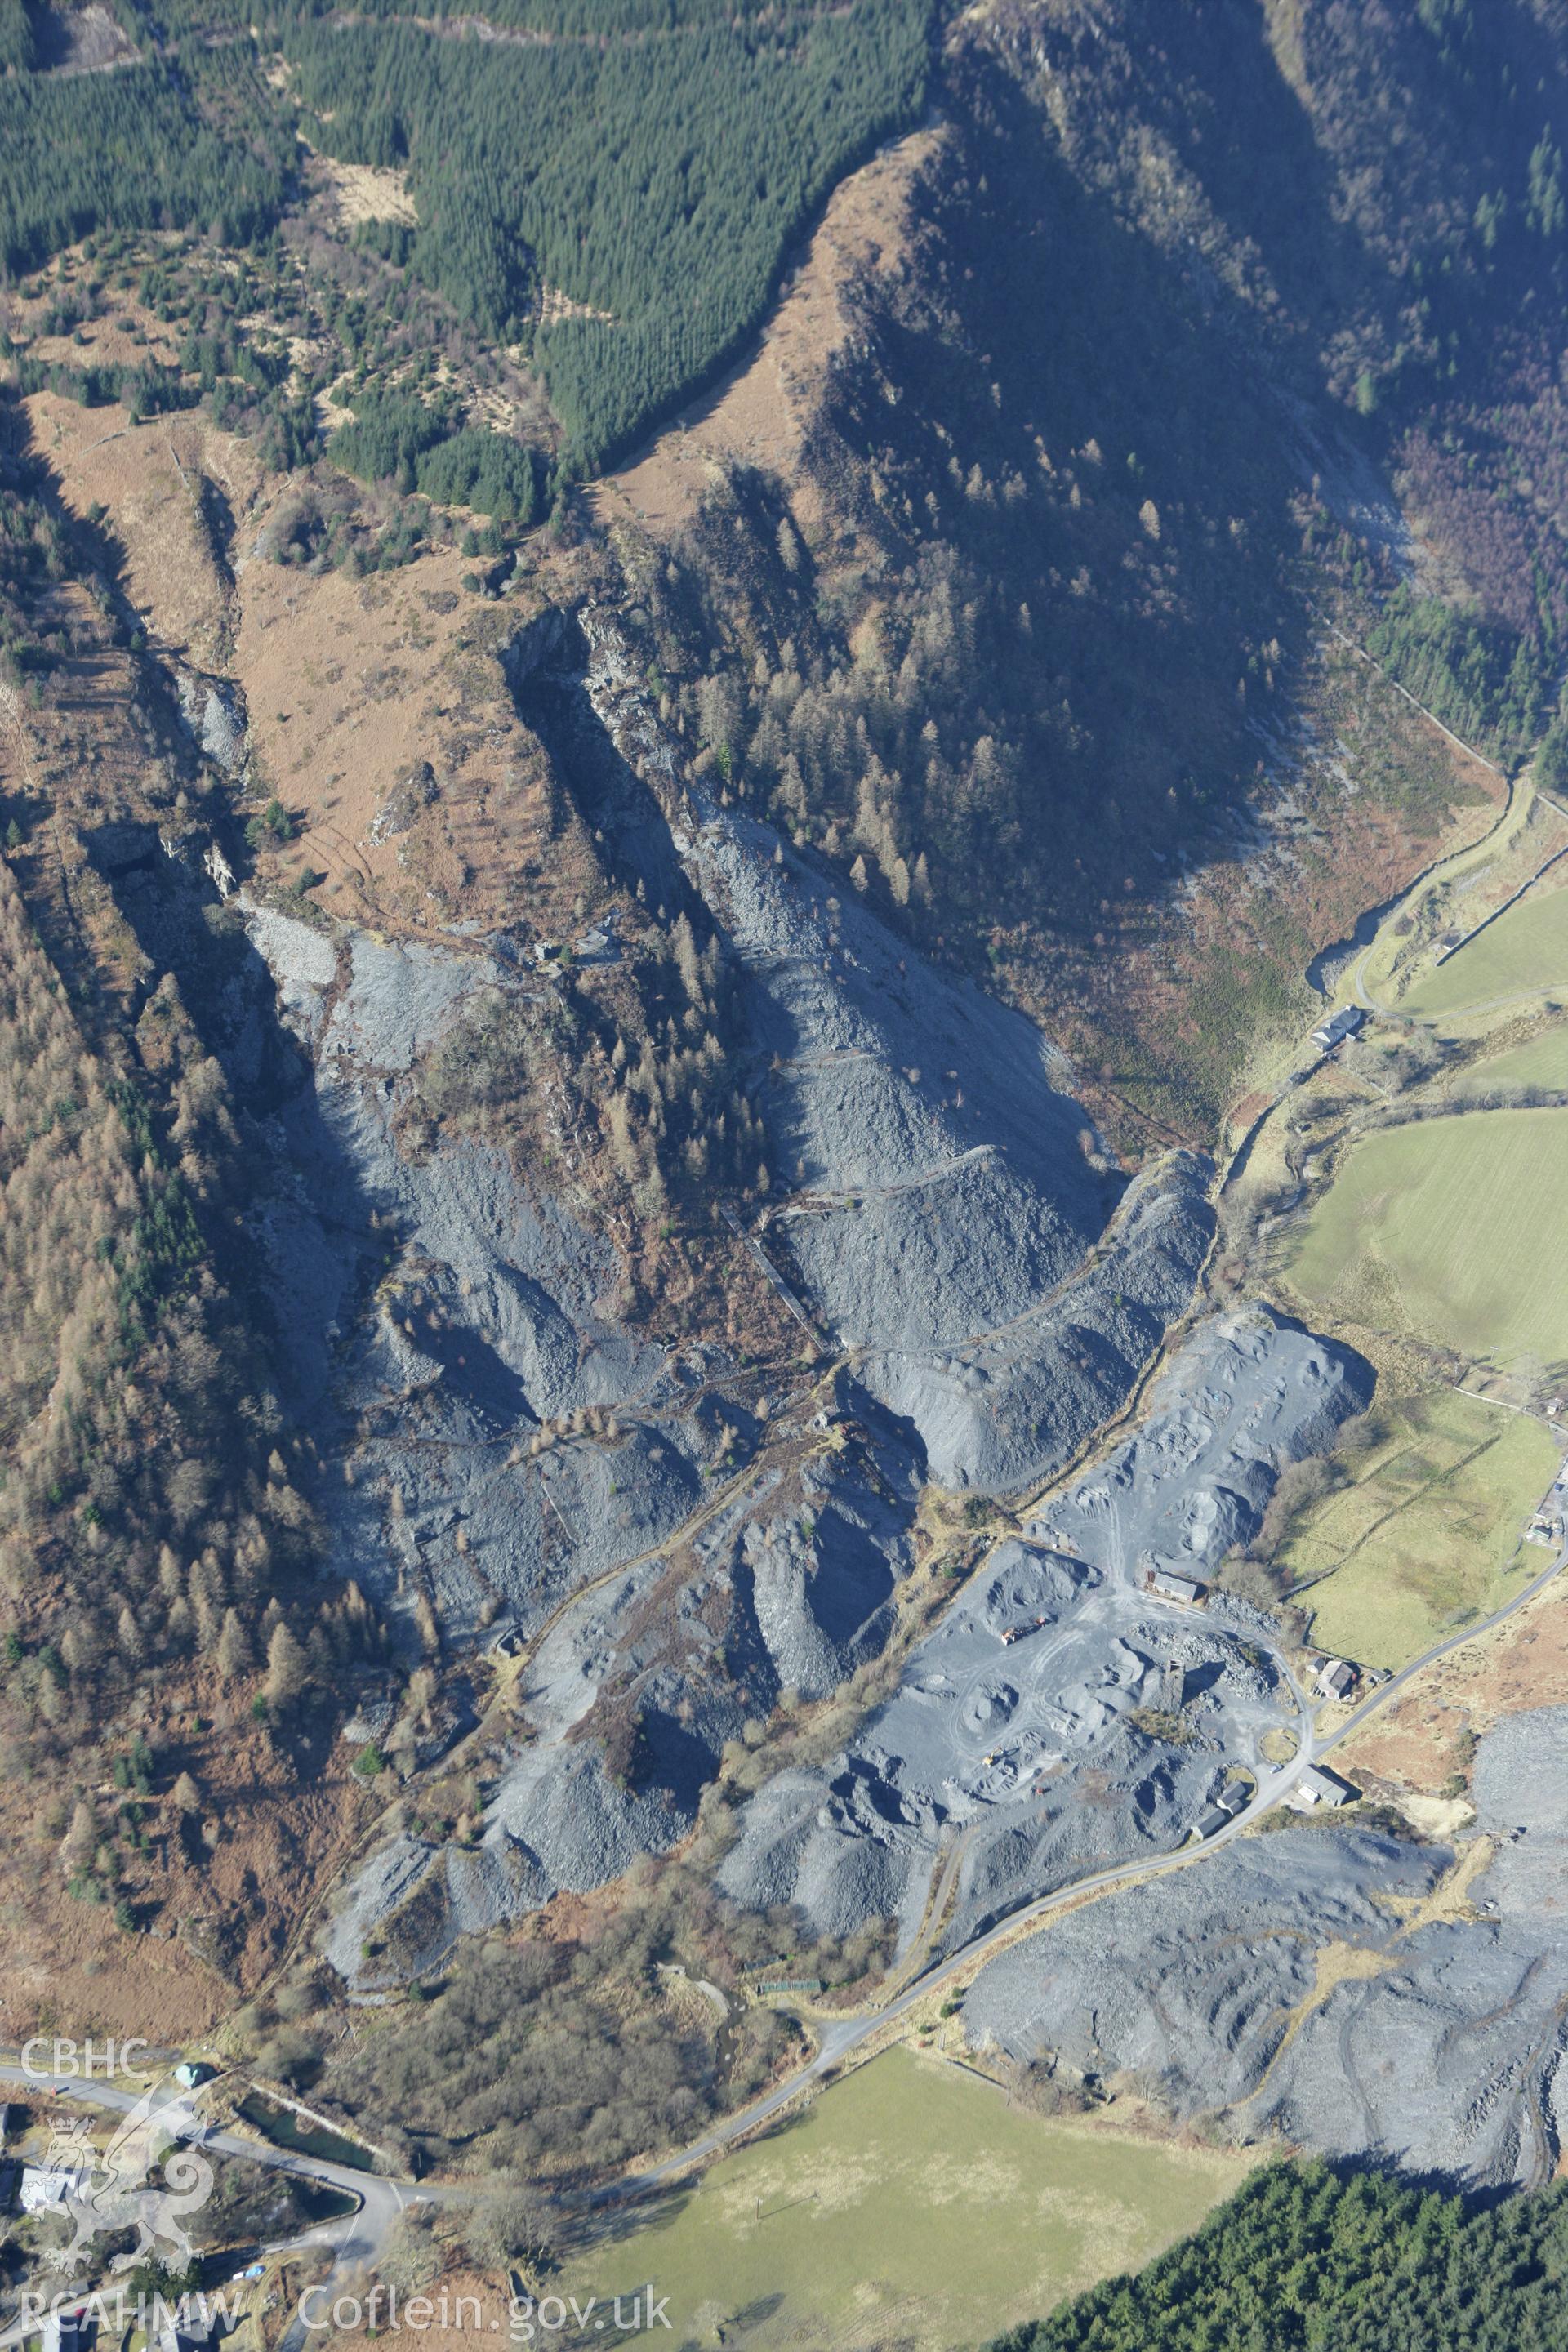 RCAHMW colour oblique photograph of Aberllefenni slate quarry. Taken by Toby Driver on 08/03/2010.